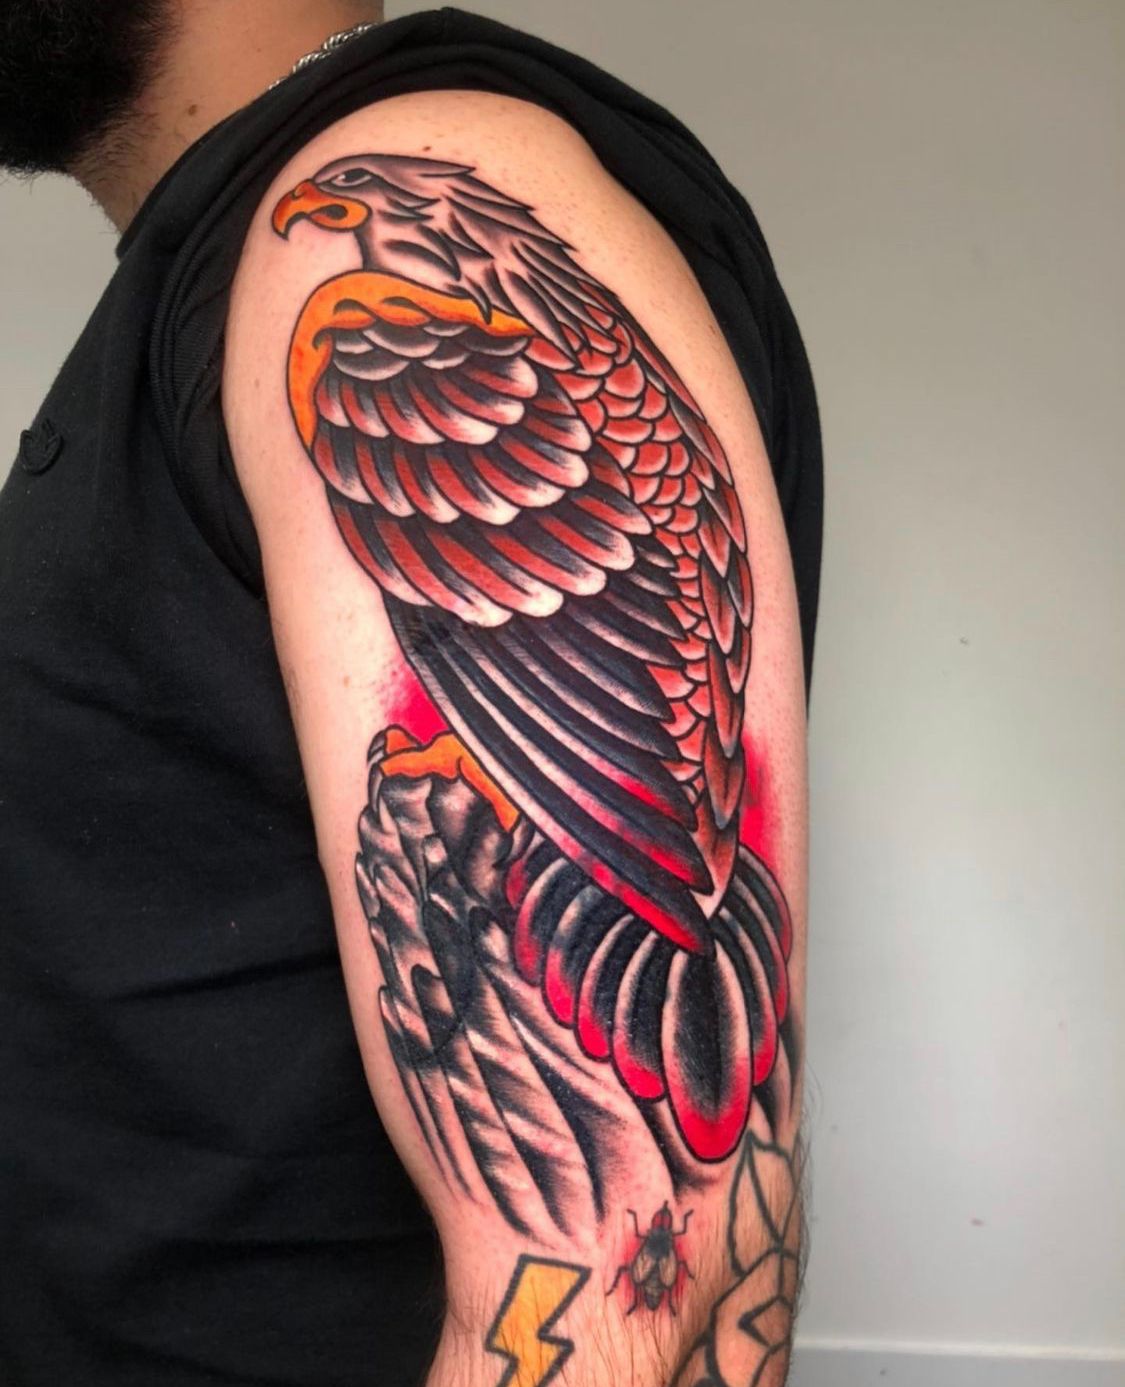 Simple celtic Eagle with wings spread upwards linework tattoo idea |  TattoosAI